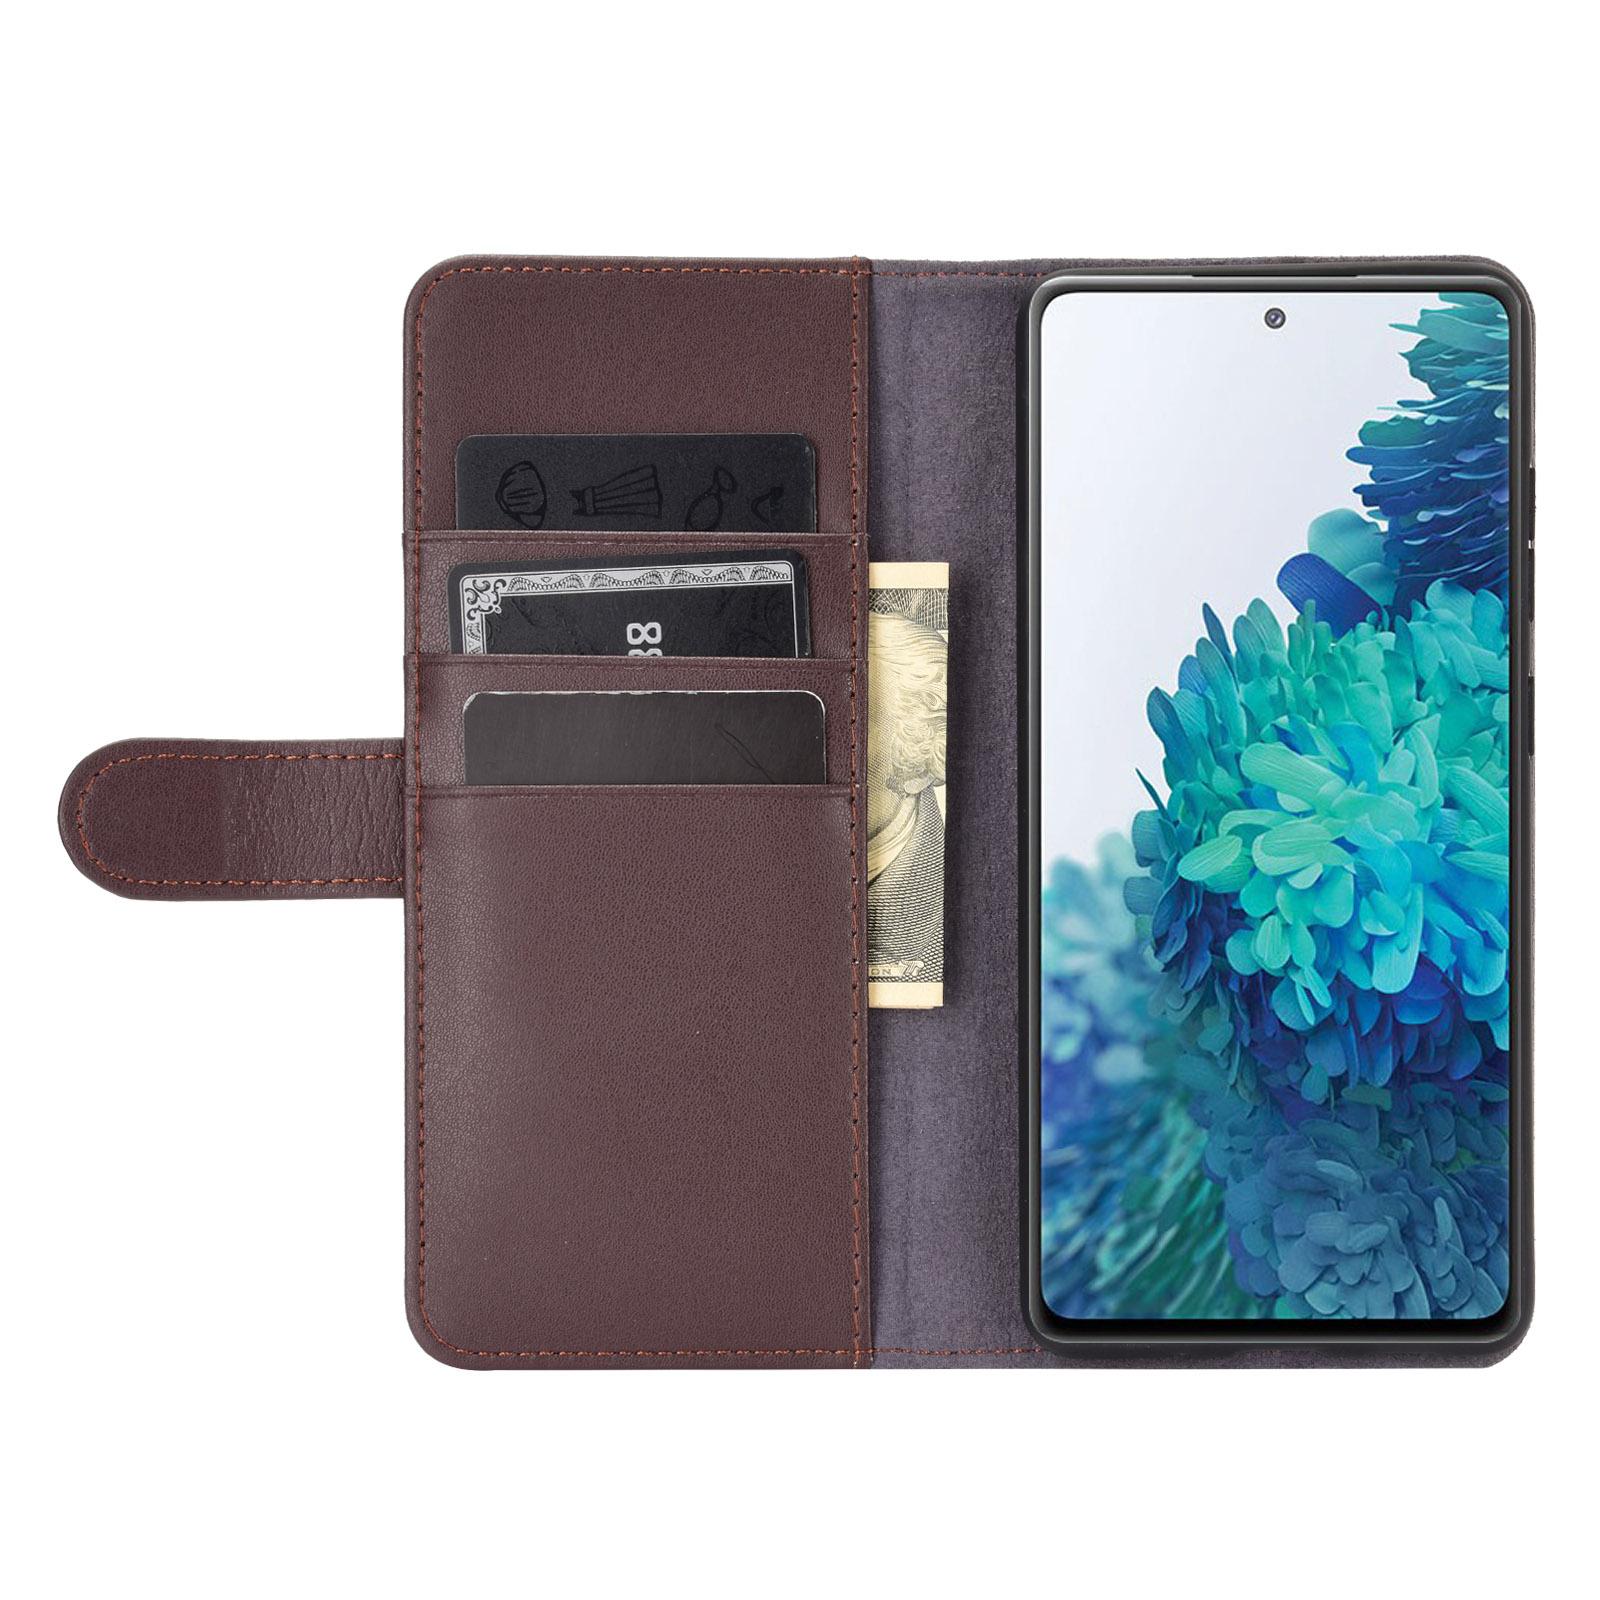 Samsung Galaxy S20 FE Plånboksfodral i Äkta Läder, brun